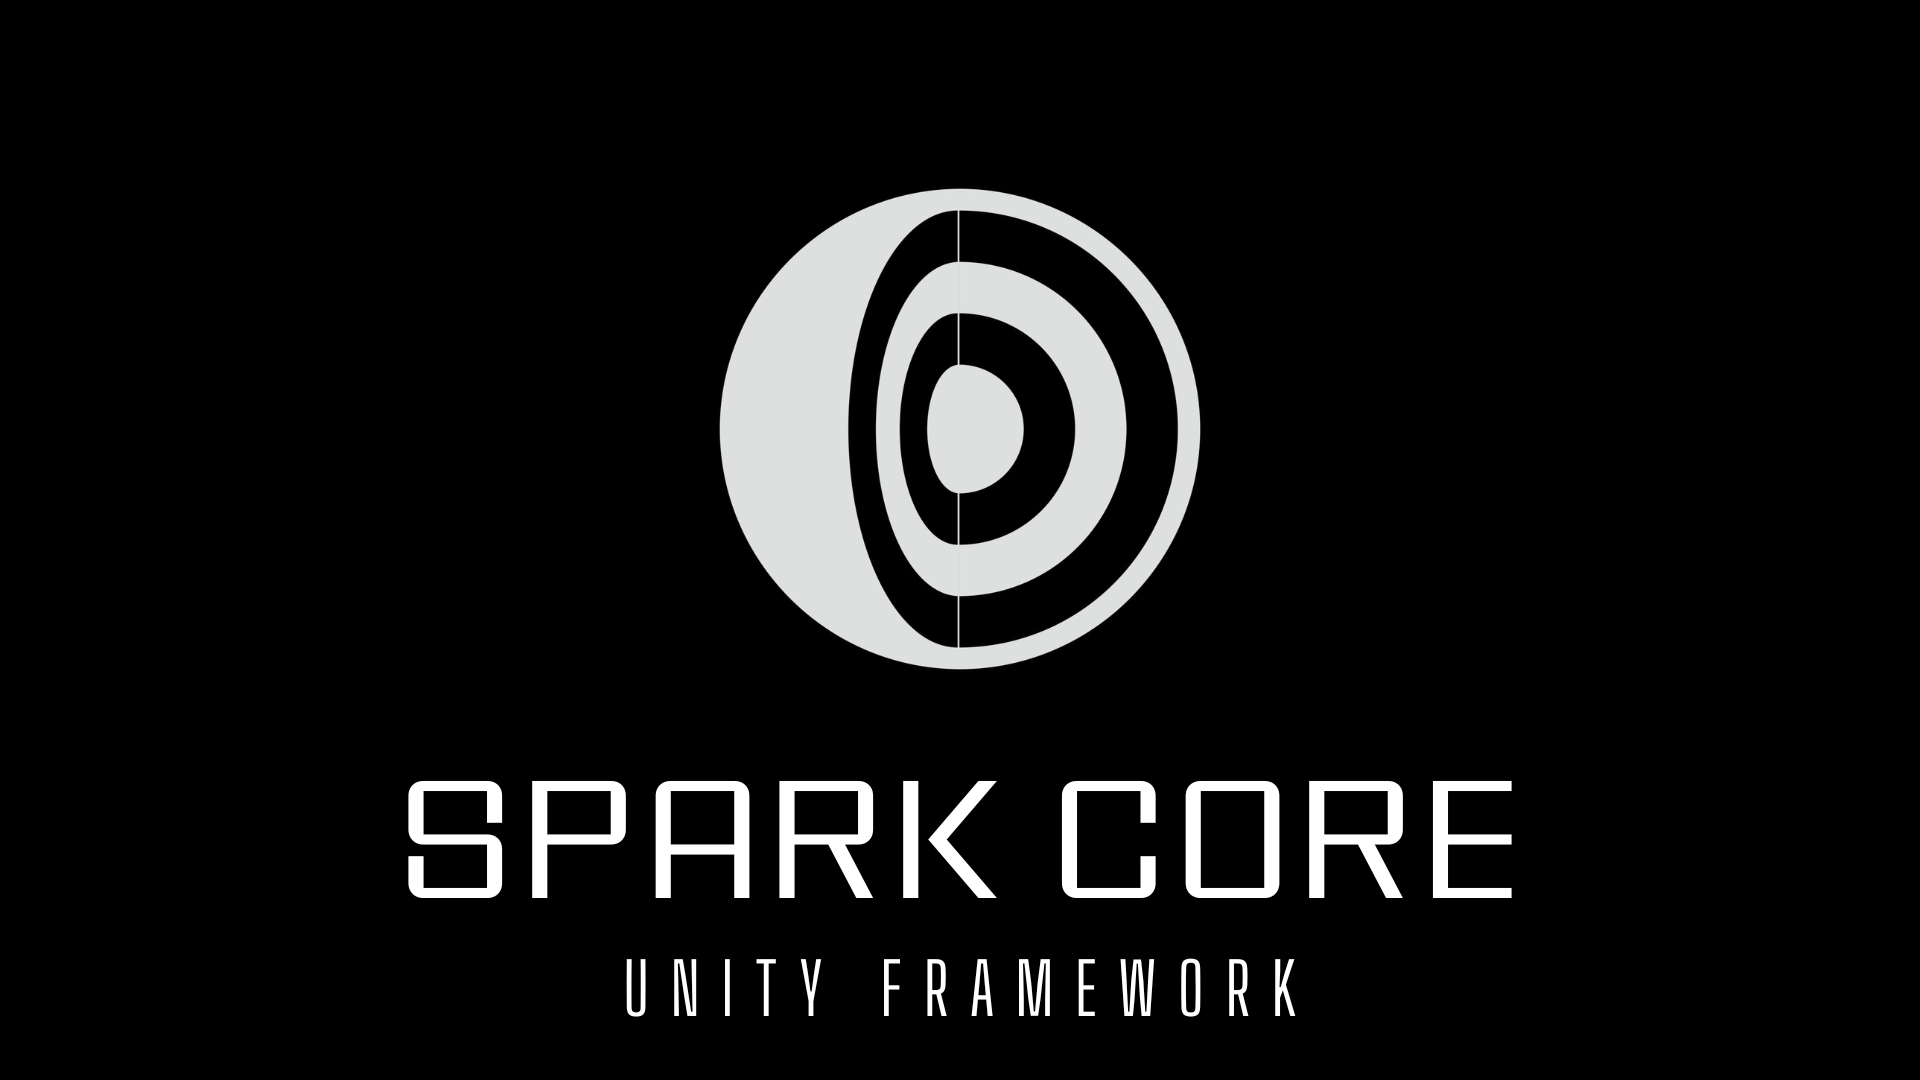 Spark Core